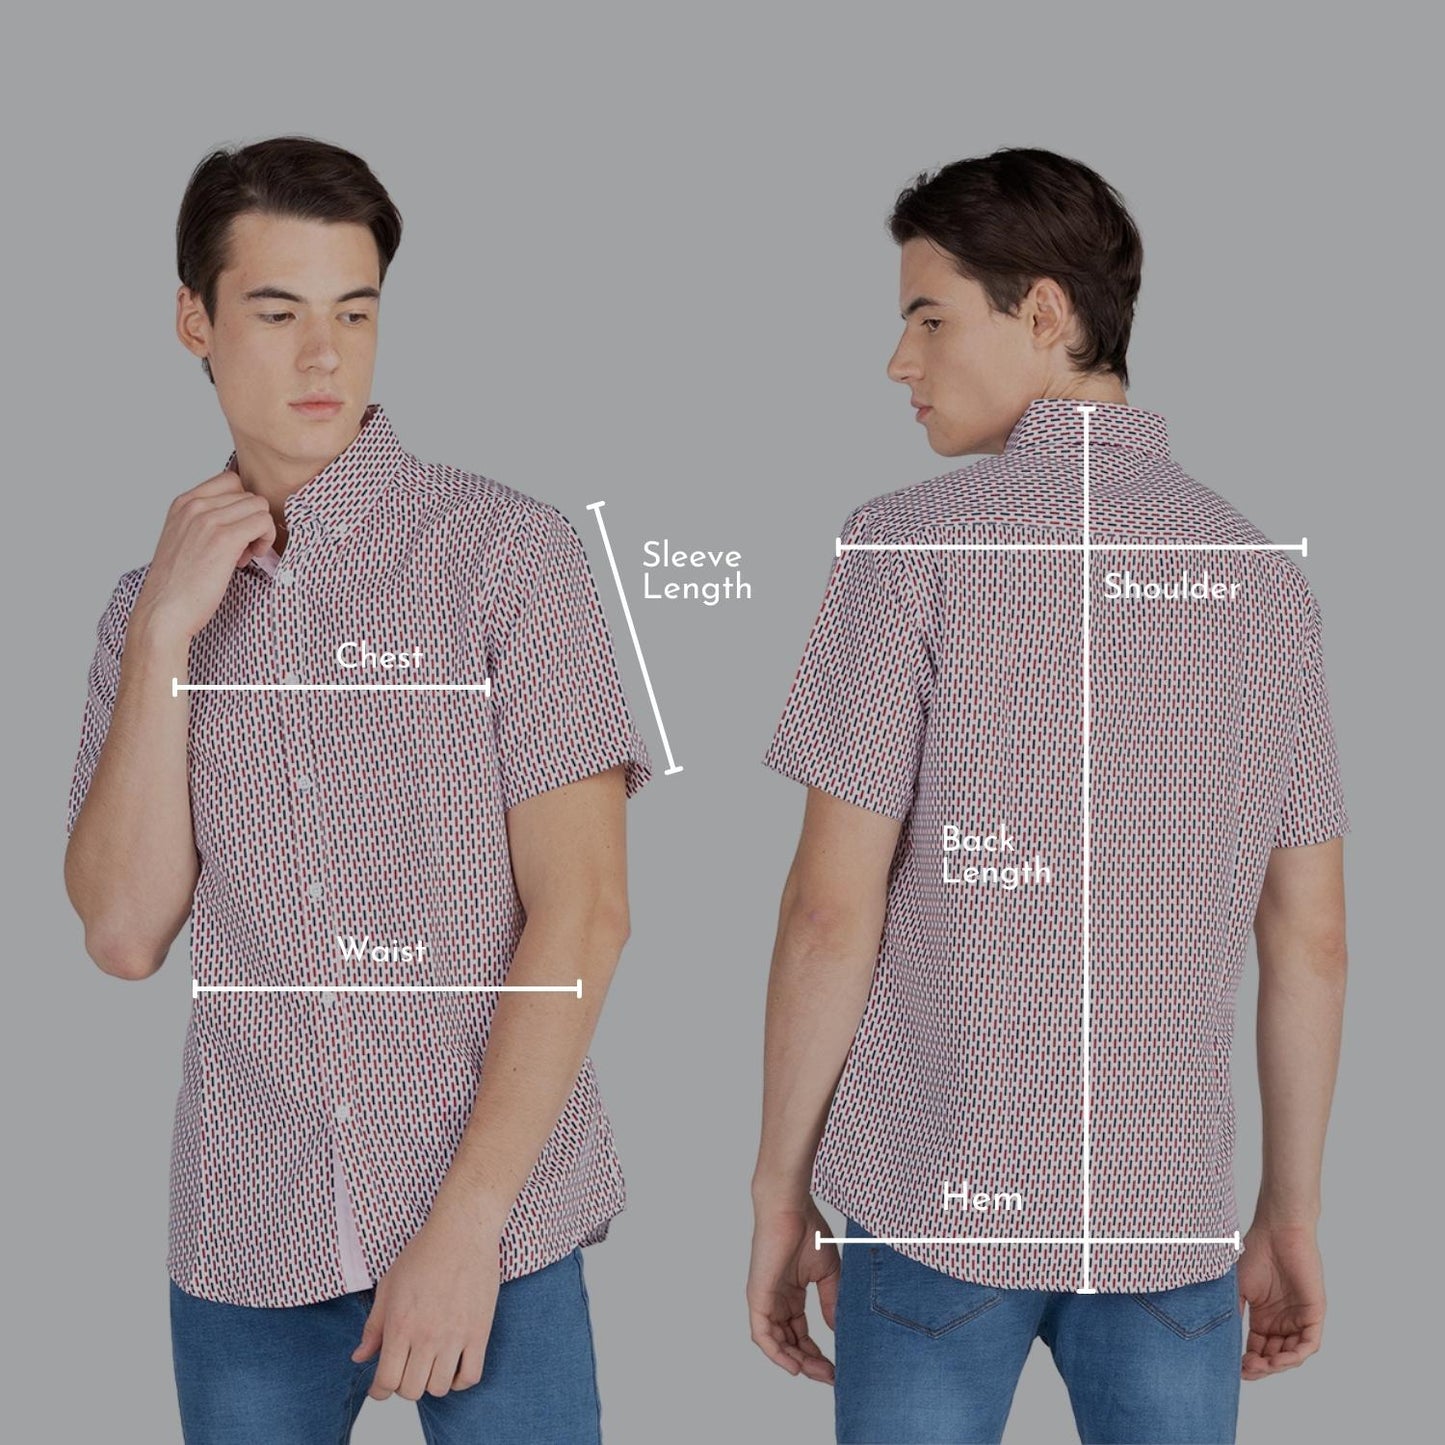 K1303 Mens REGULAR FIT Heritage Prints Button Down Short Sleeve Shirt - IDENTITY Apparel Shop